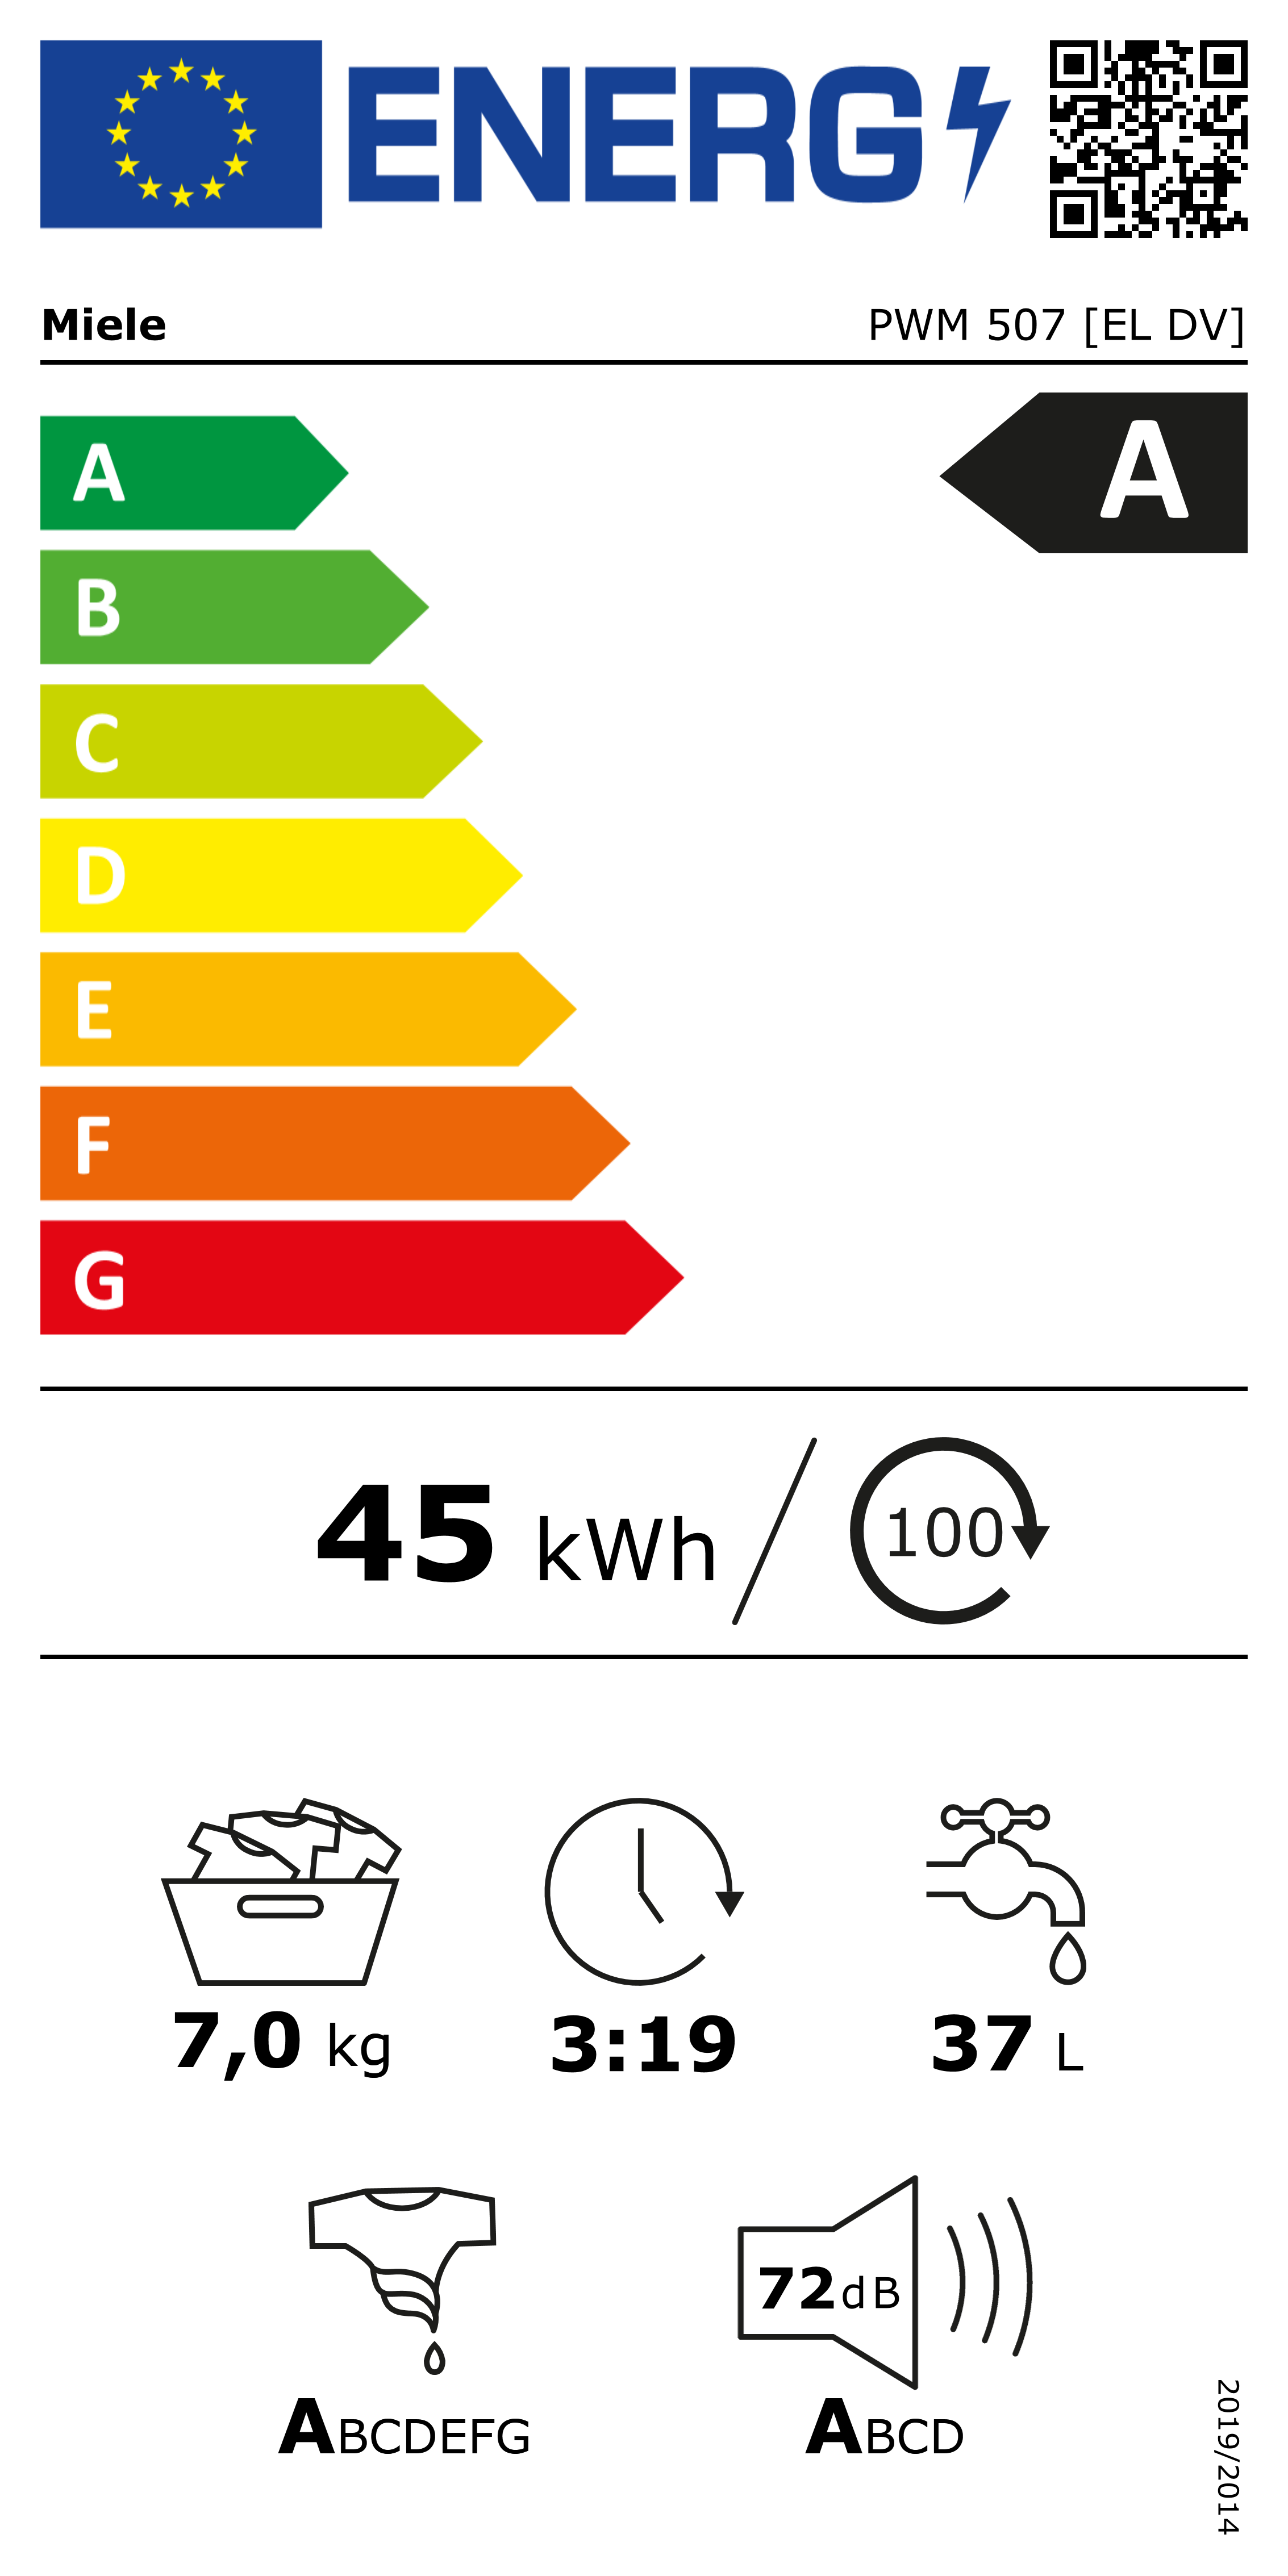 PWM 507 [EL DV] Produktbild Energysaving energysaving